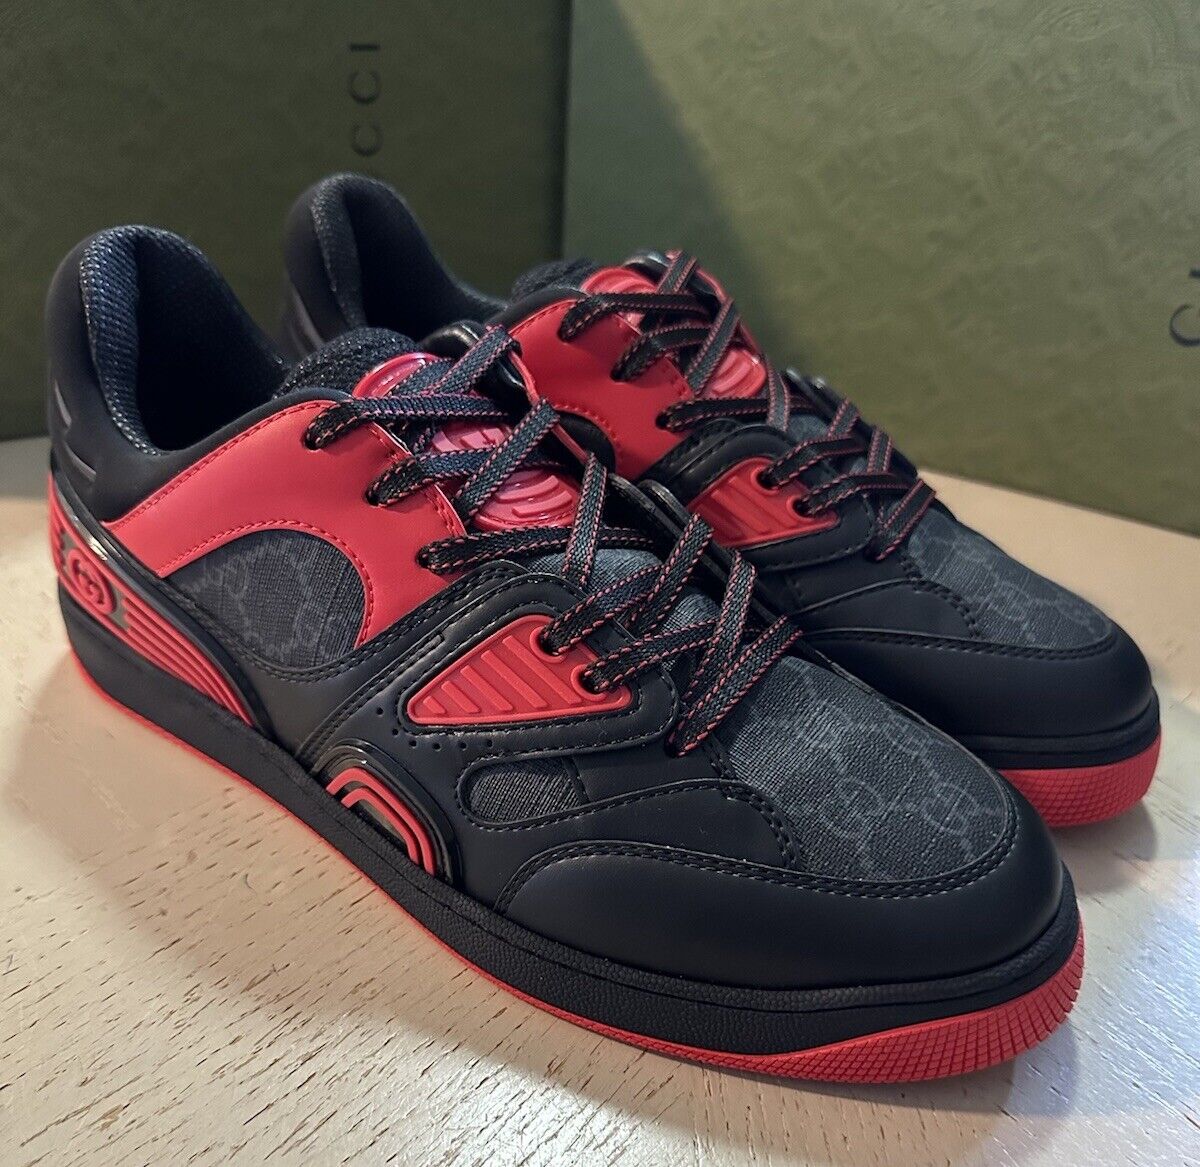 Gucci Men GG Supreme Demetra Basket Sneakers Black/Red 10 US/9 UK 724004 New